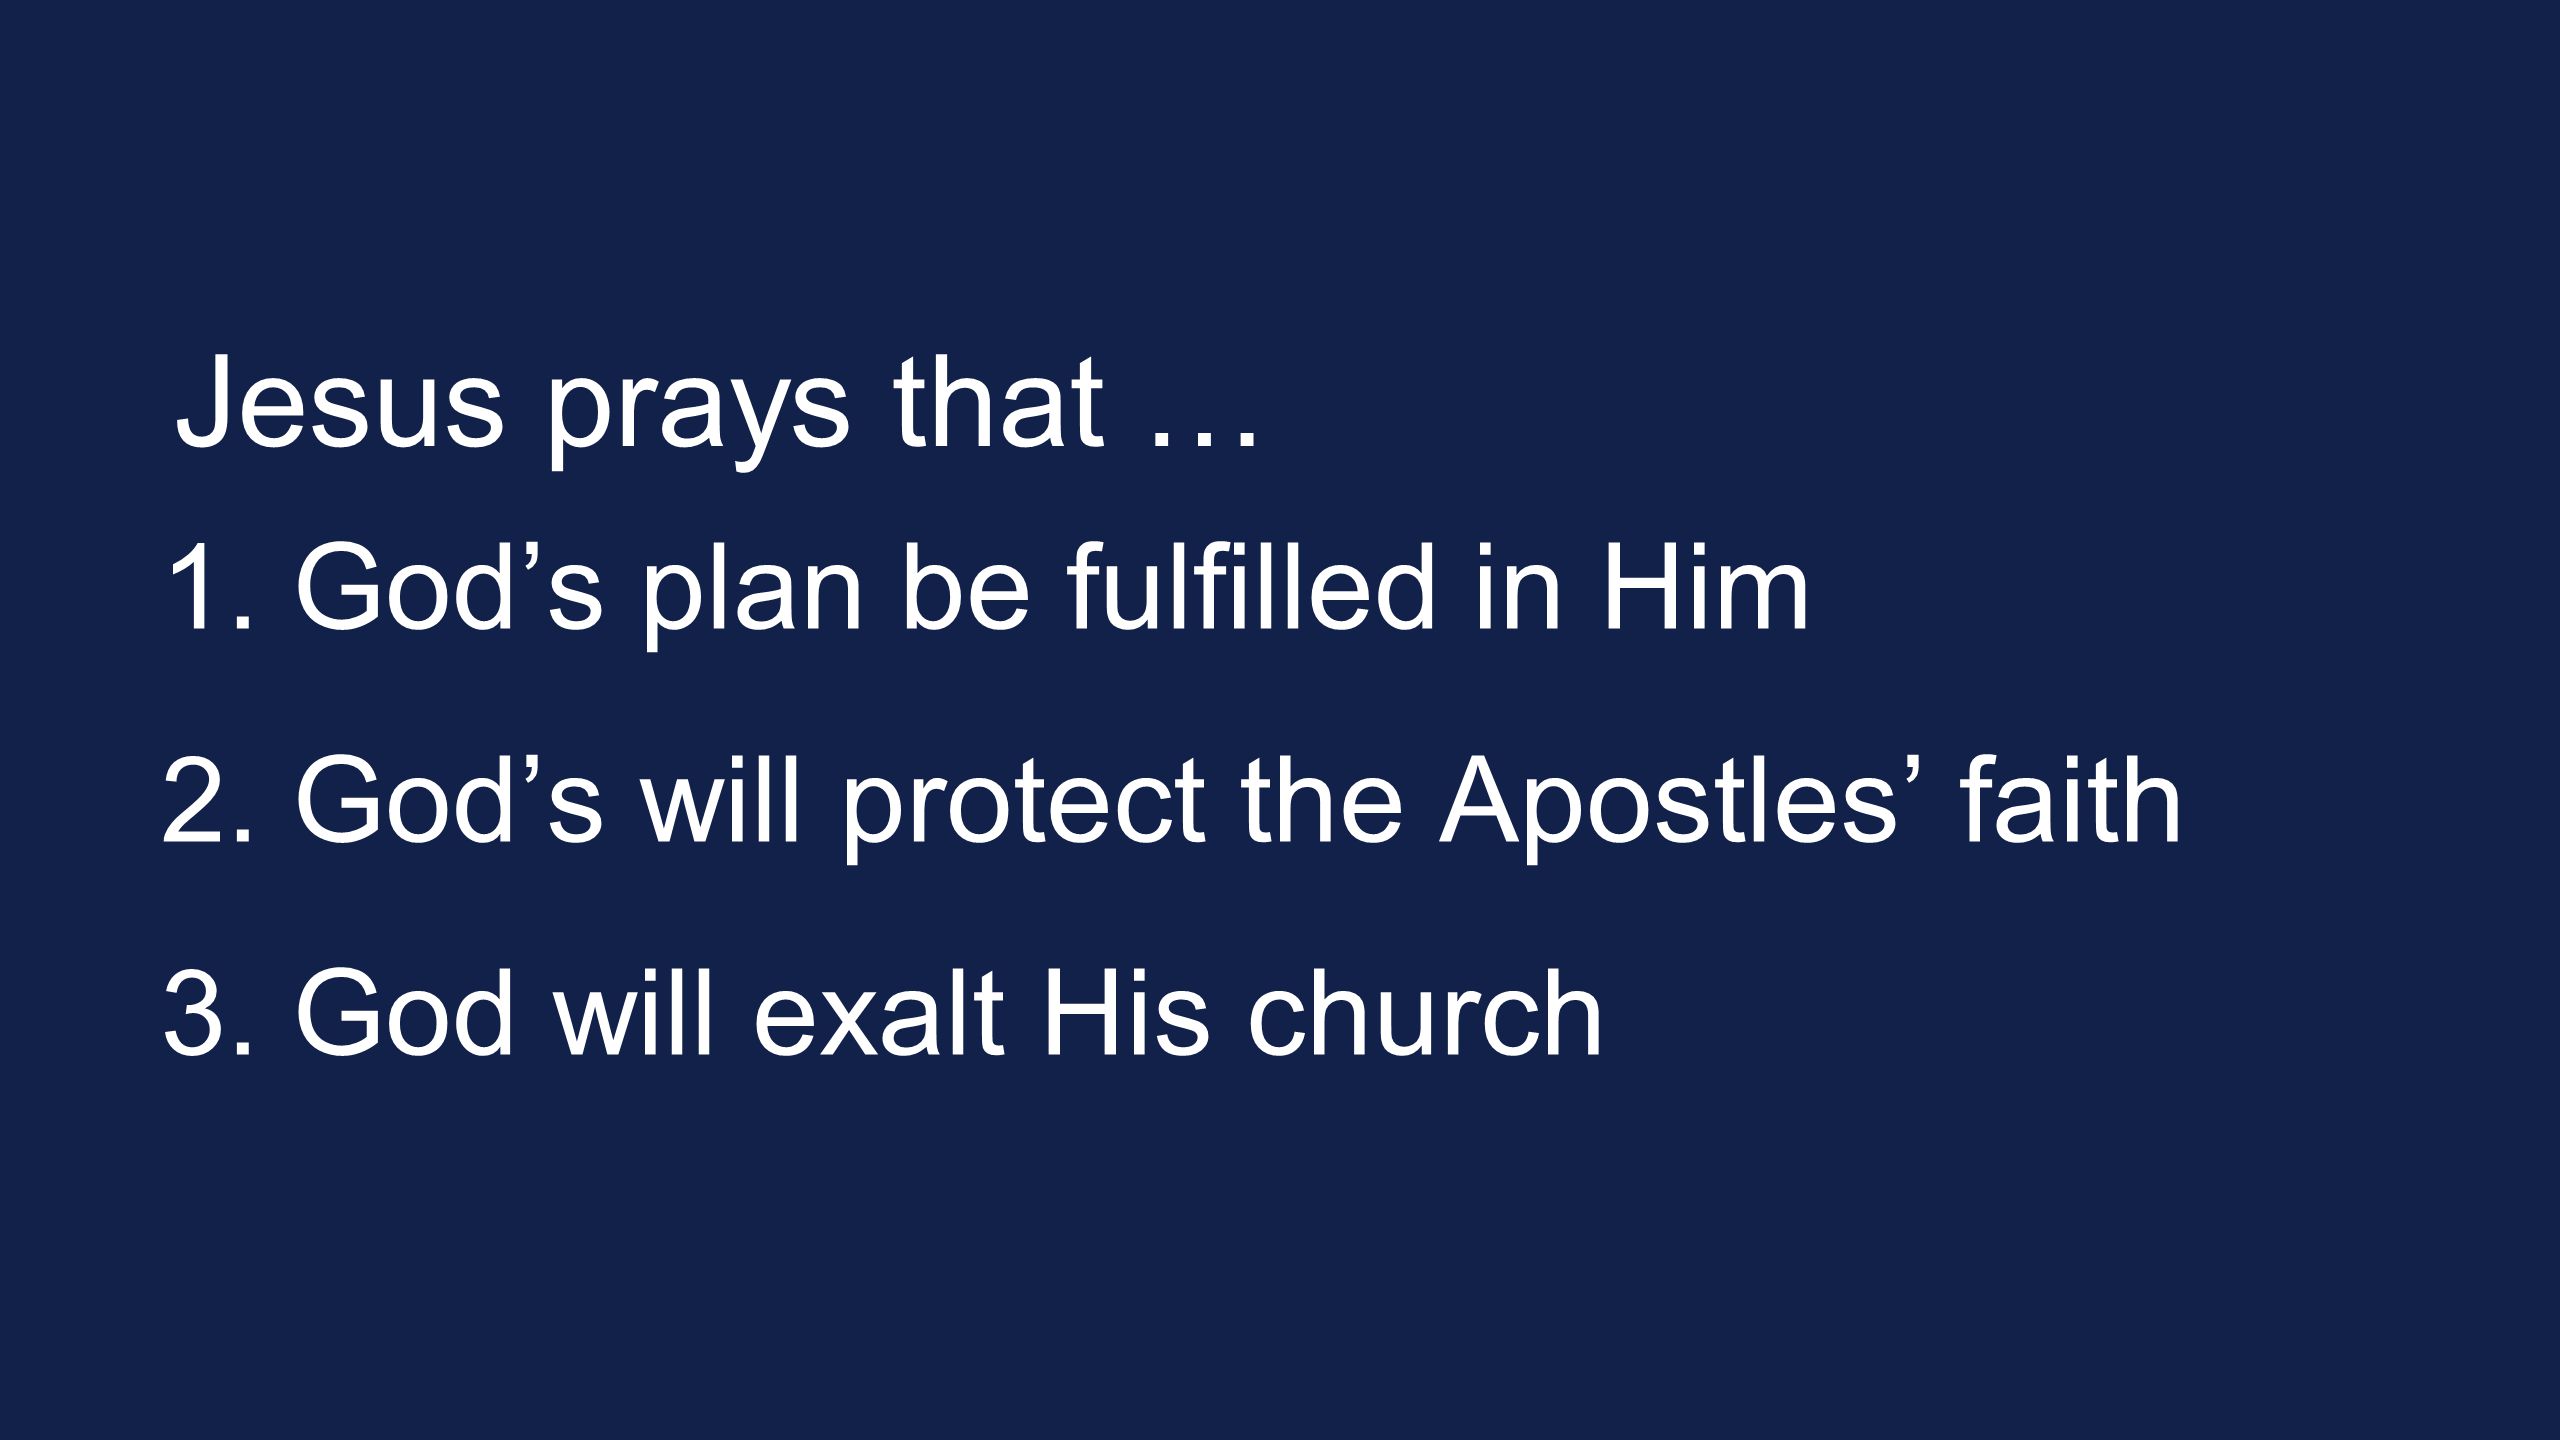 Jesus prays that … God’s plan be fulfilled in Him